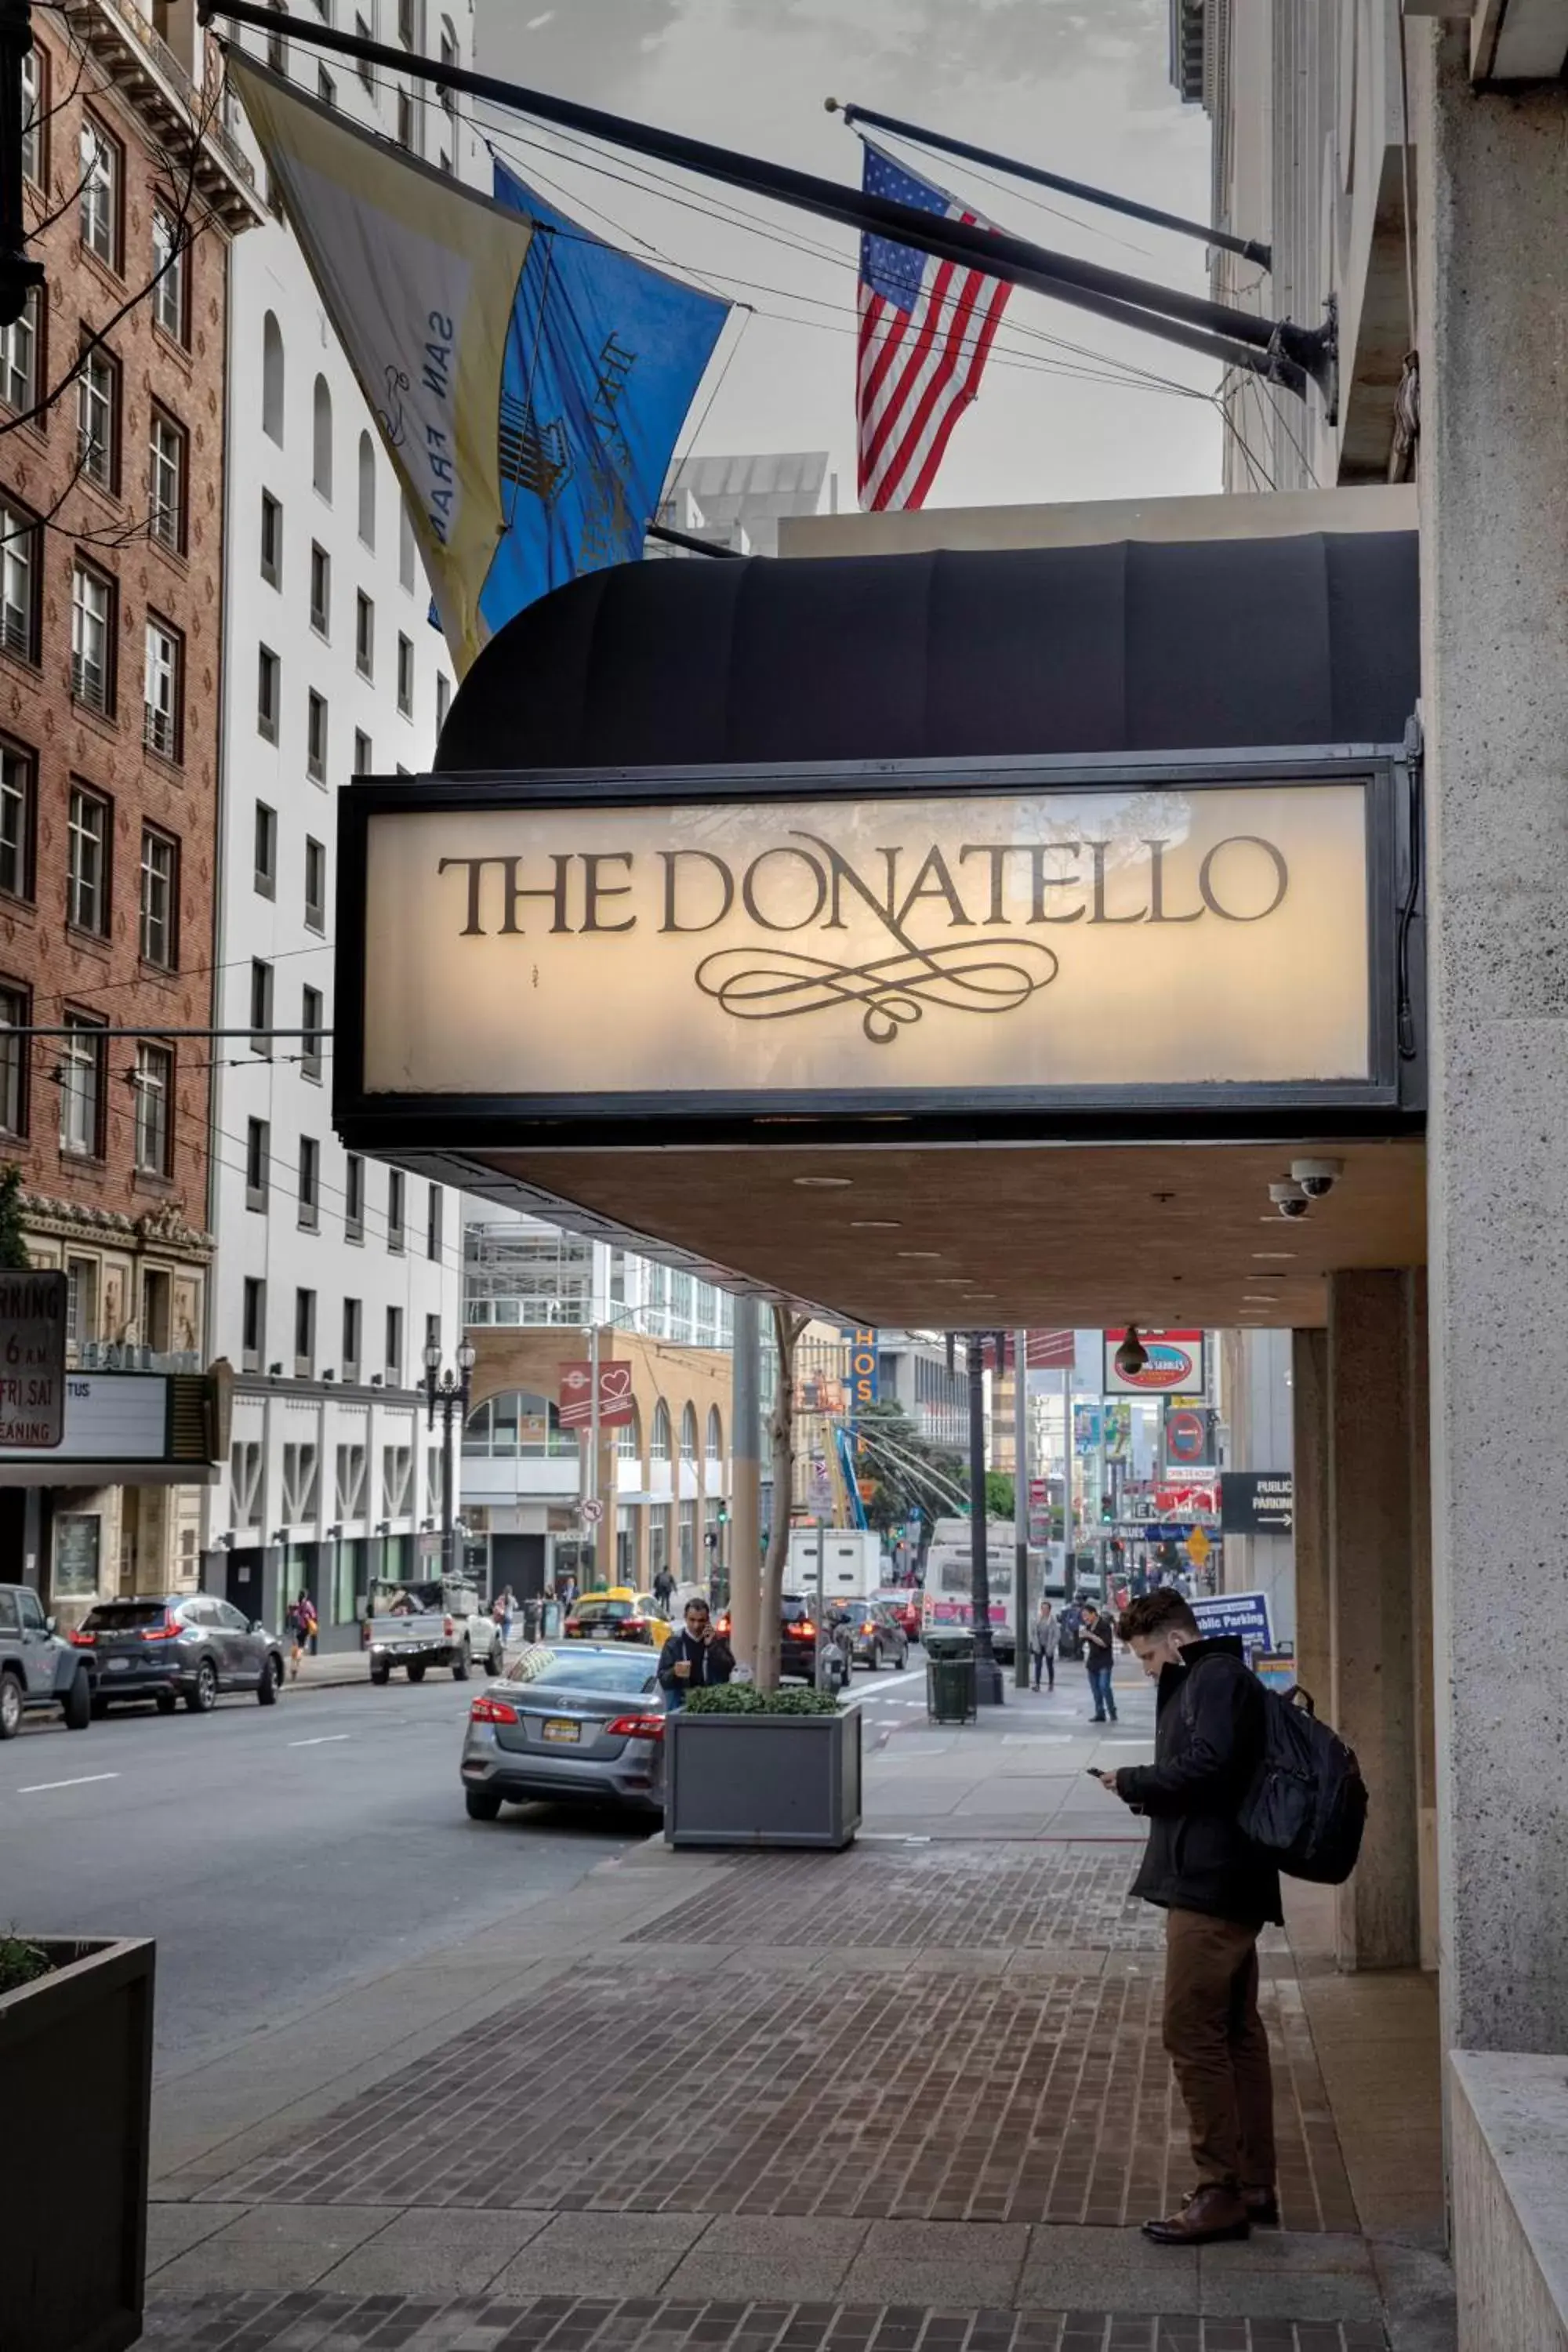 Facade/entrance in The Donatello Hotel